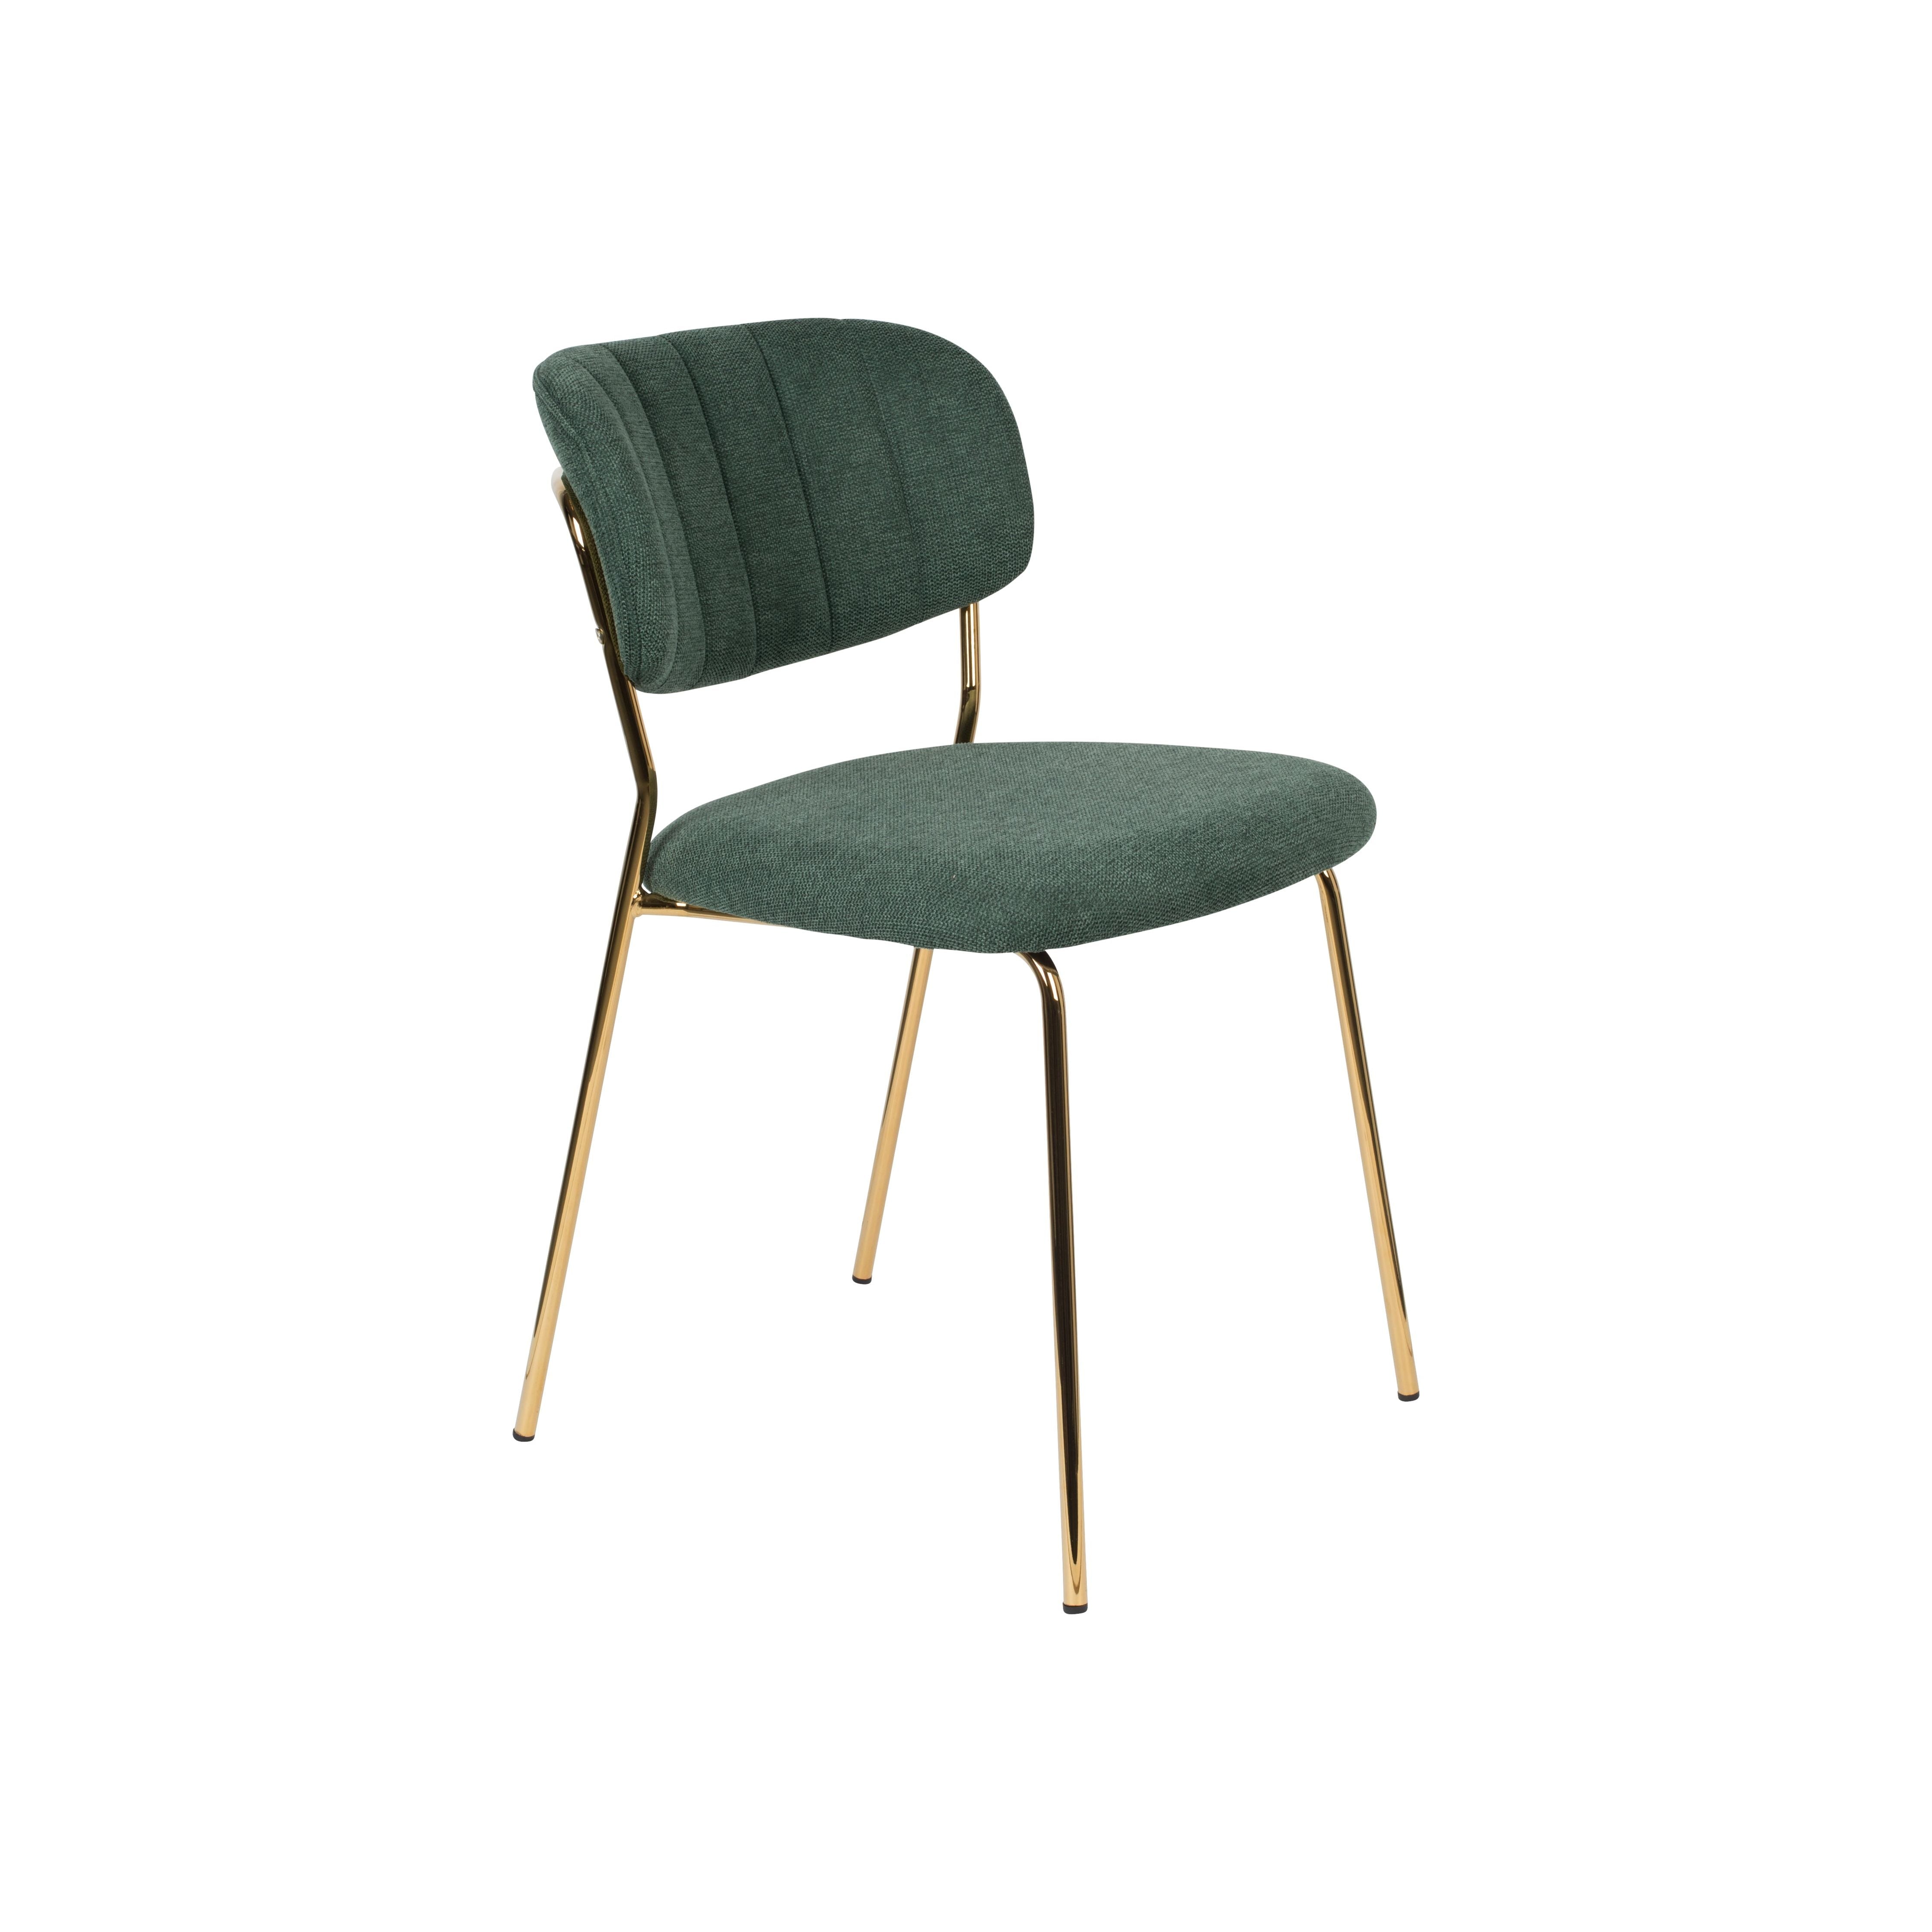 Chair jolien gold/dark green | 2 pieces